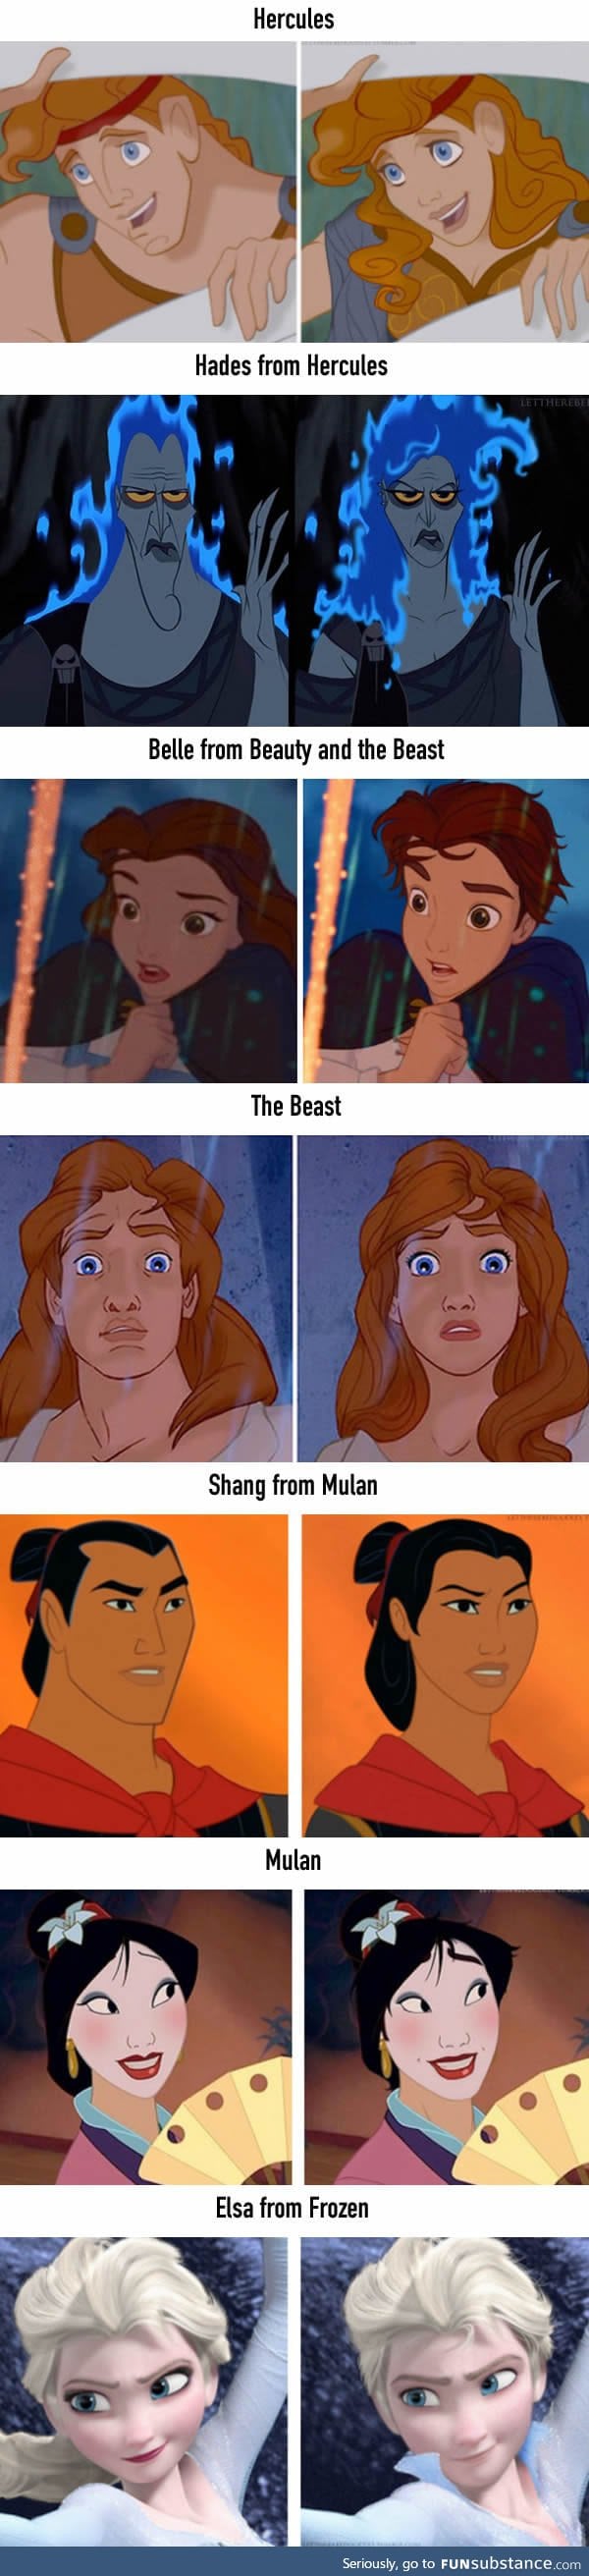 Gender bending with Disney